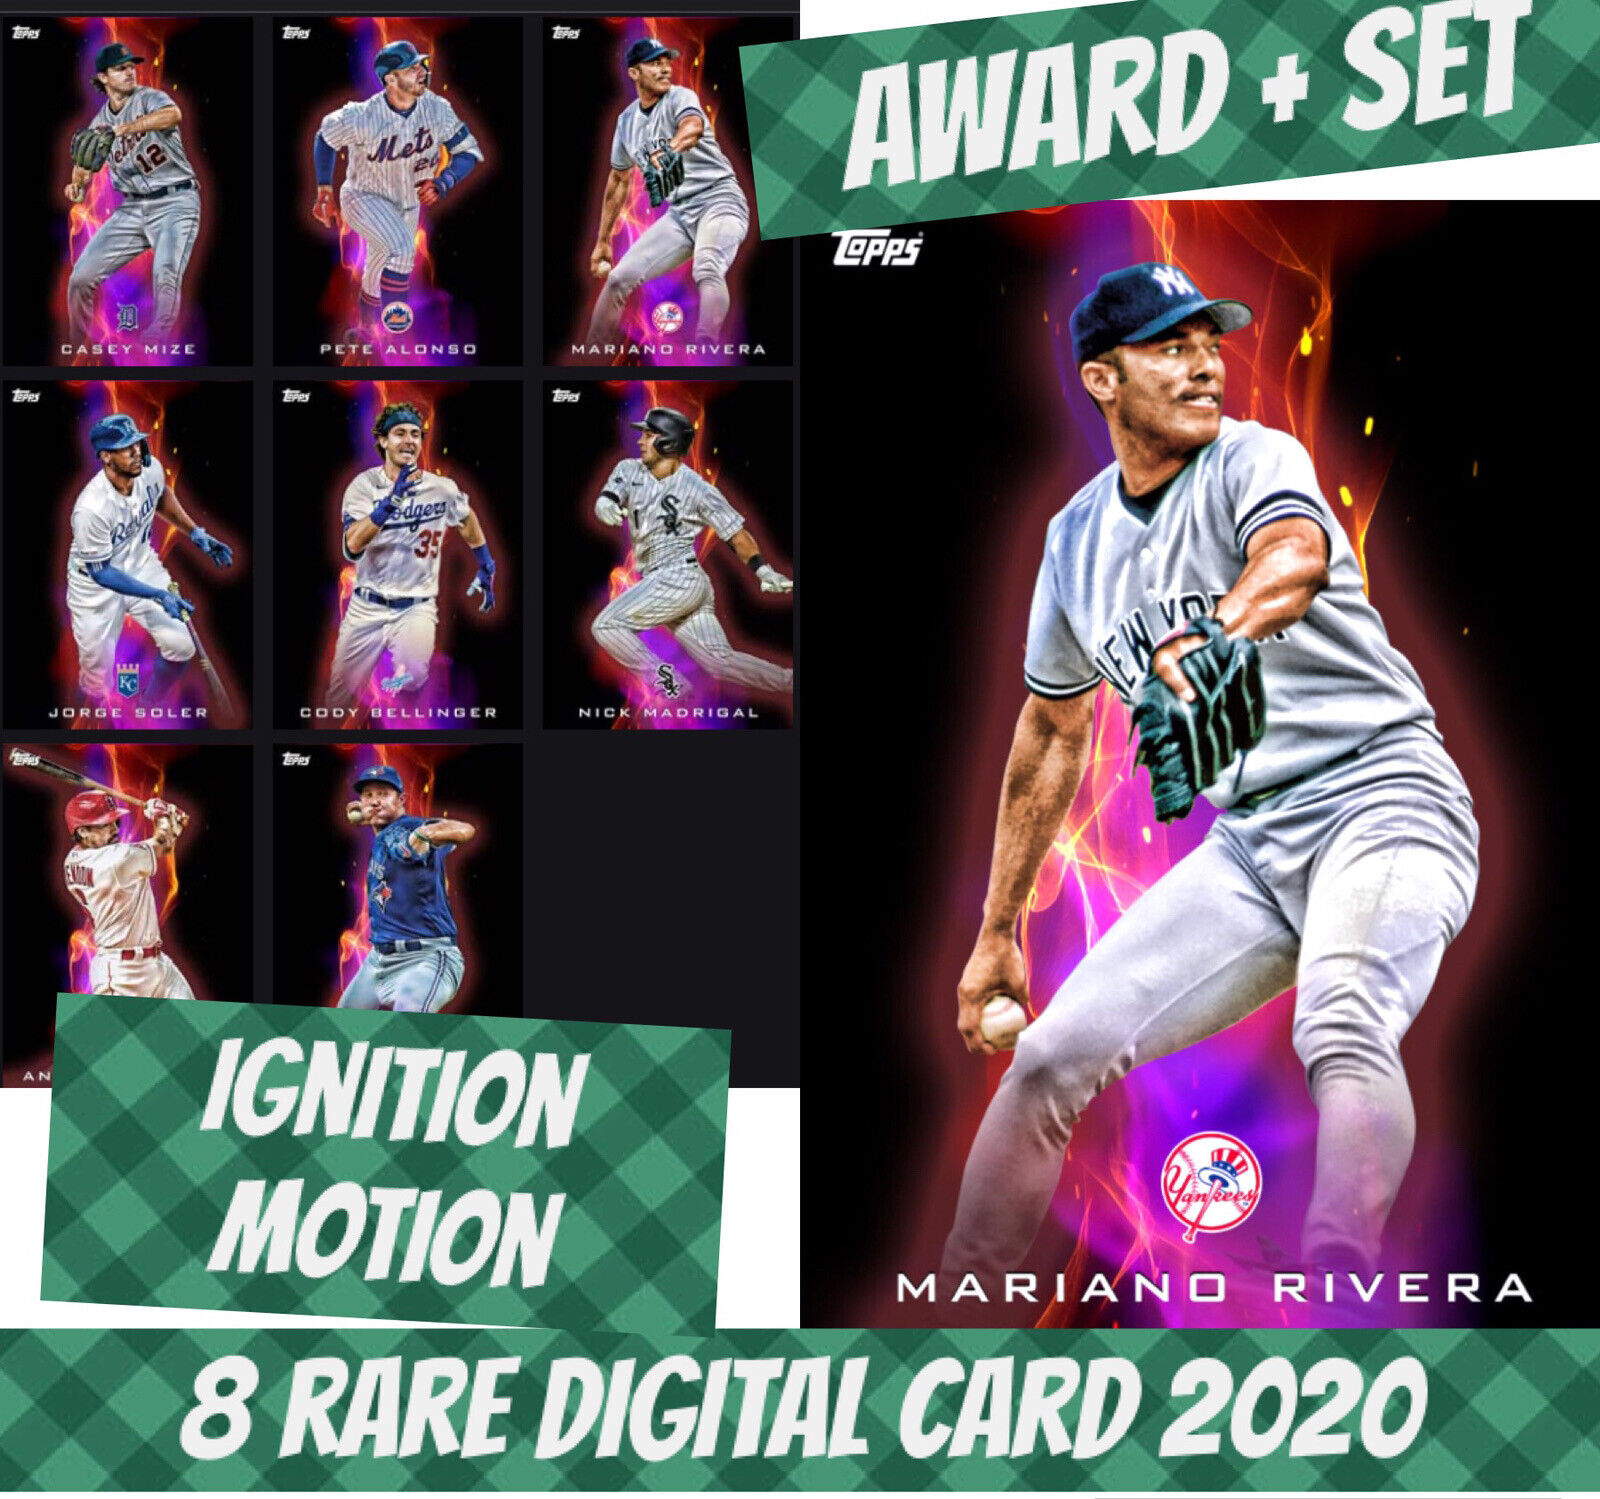 2020 Topps Bunt Mariano Rivera Rare Award + Set (1+7) Ignition Motion Digital